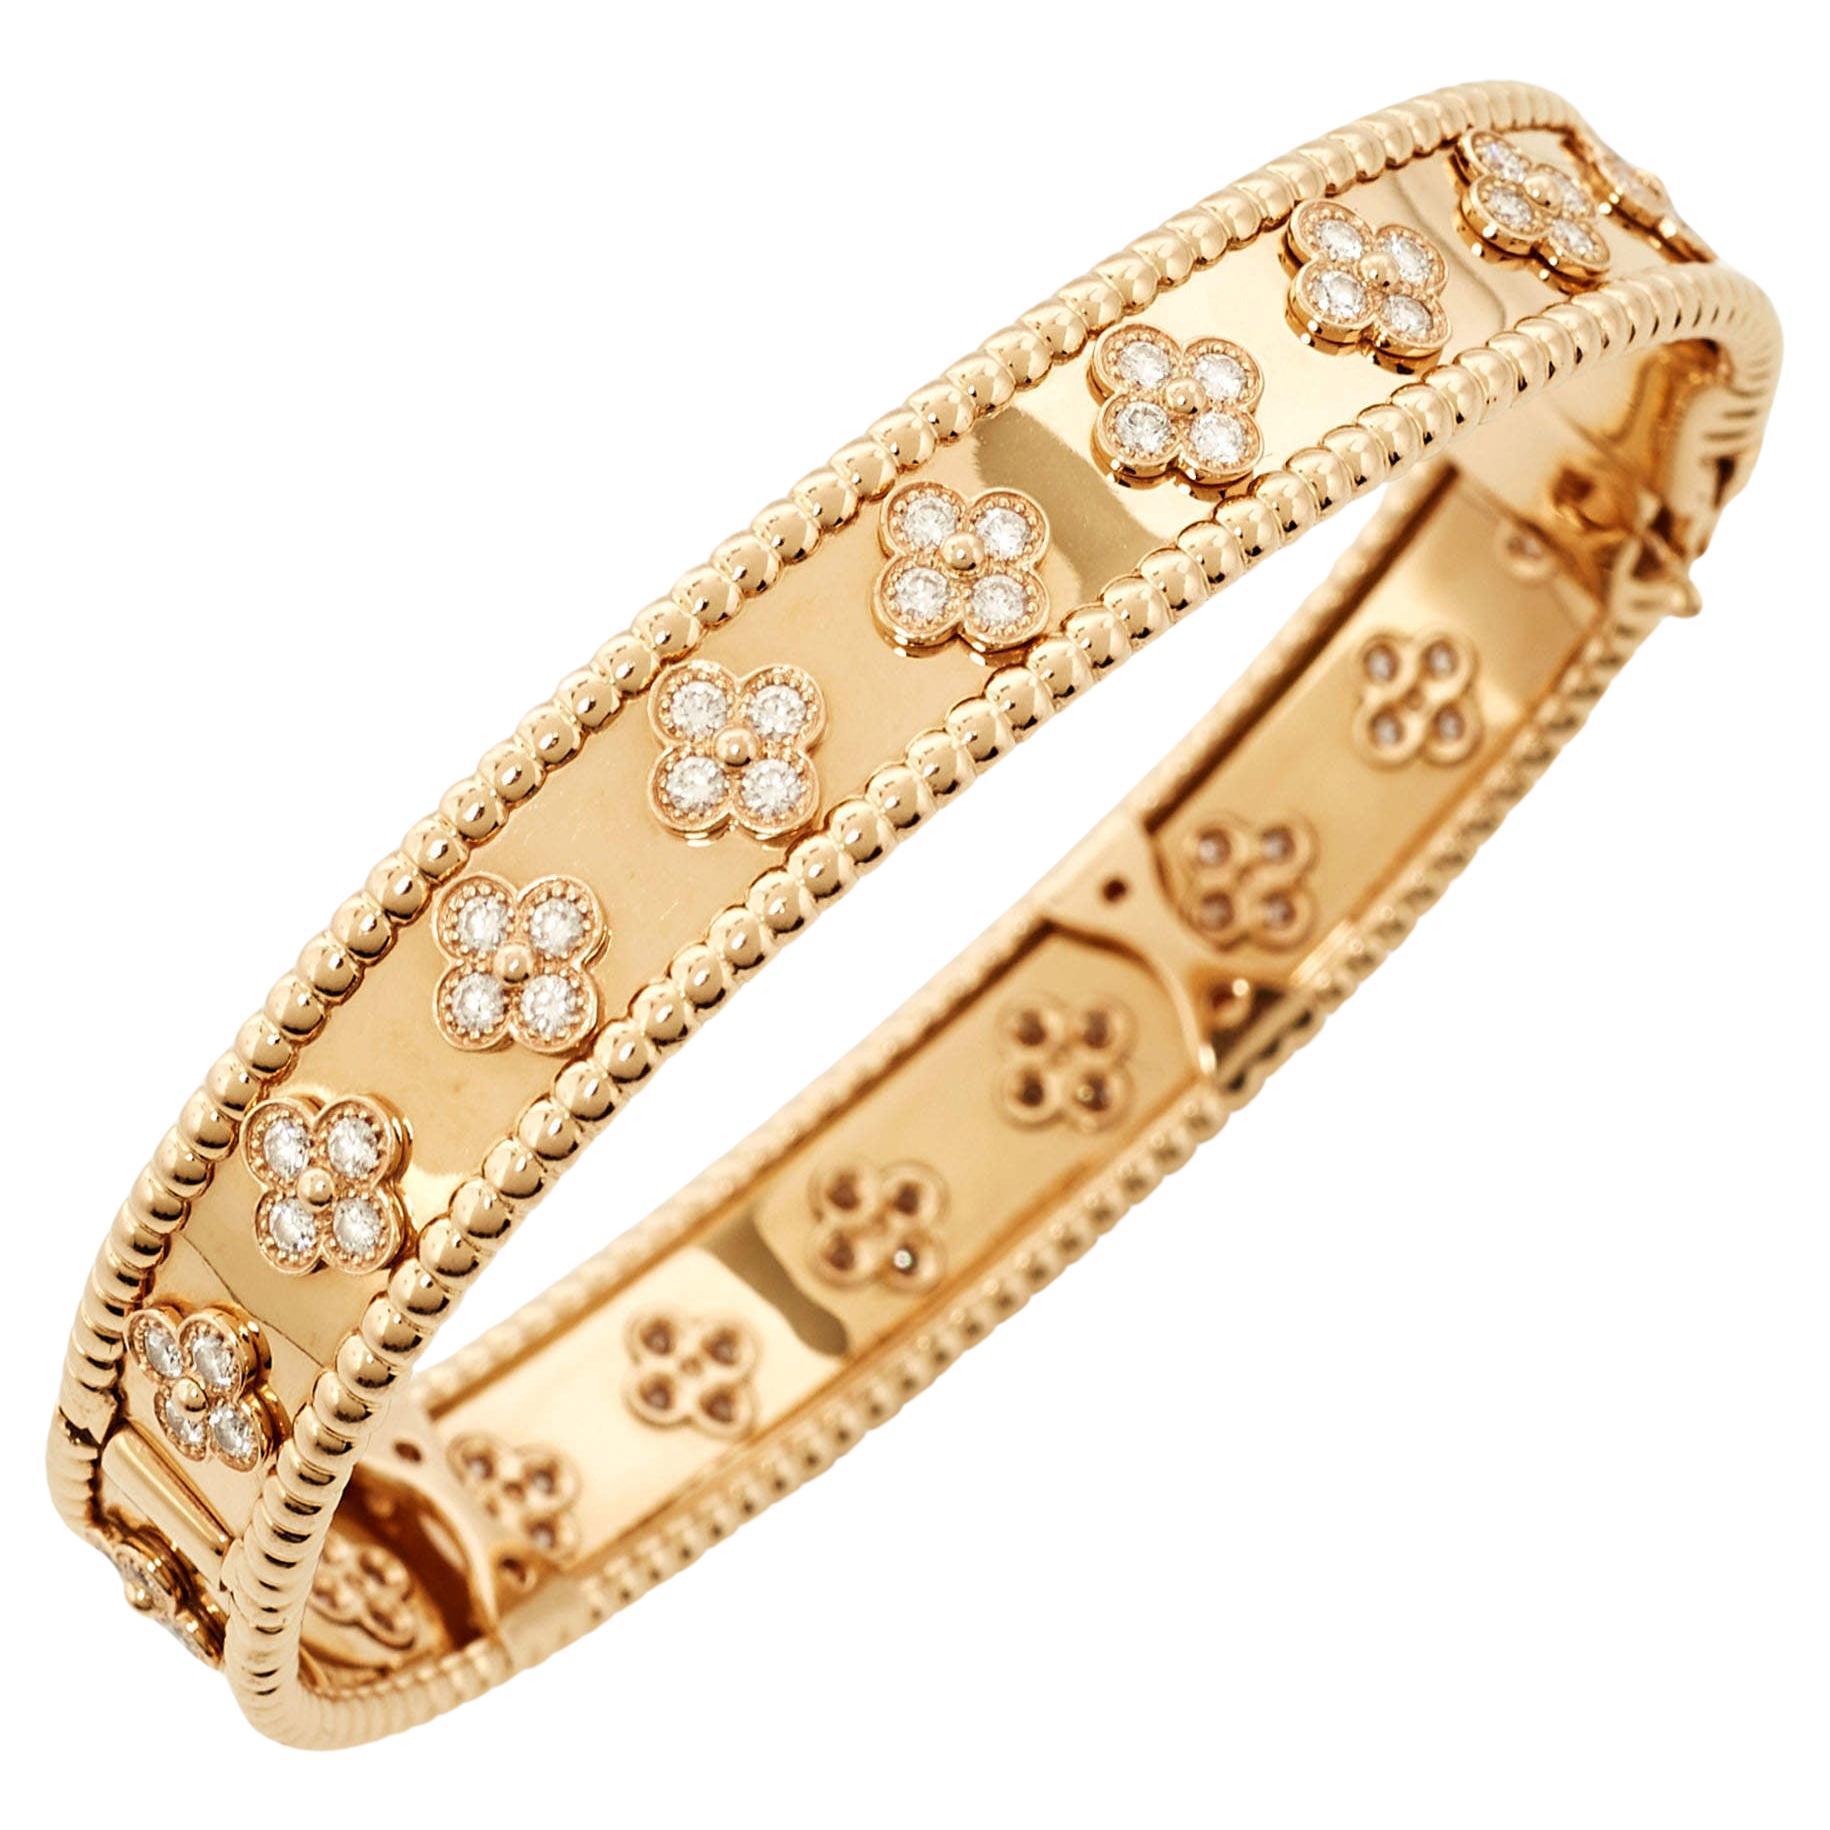 Van Cleef & Arpels Perlée Kleeblätter Diamant 18k Rose Gold Medium Modell Armband 